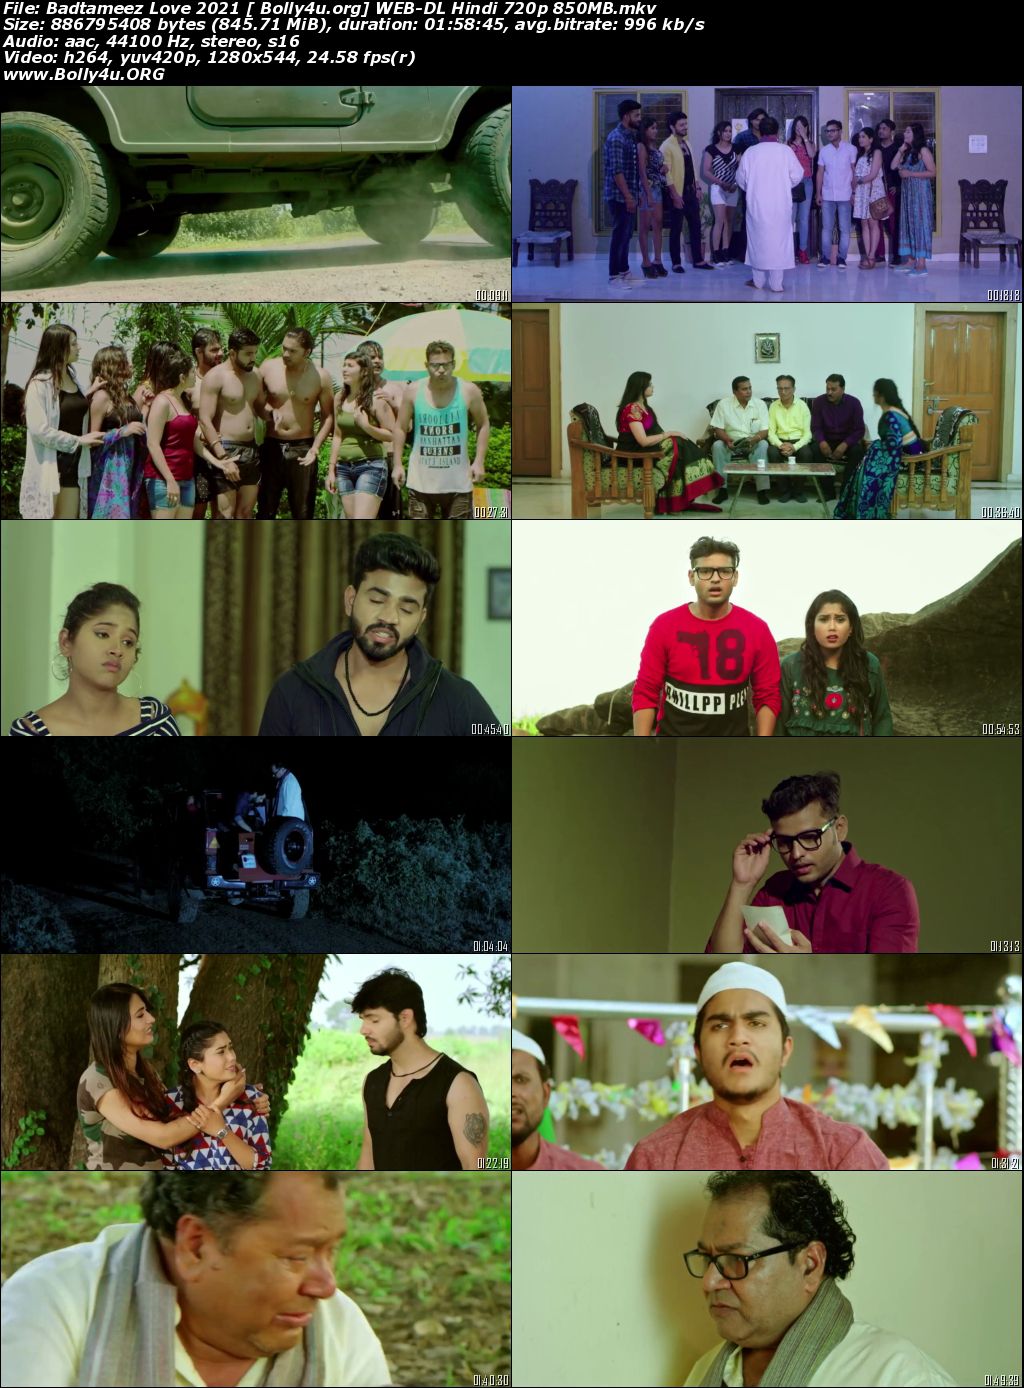 Badtameez Love 2021 WEB-DL 400MB Hindi Movie Download 480p